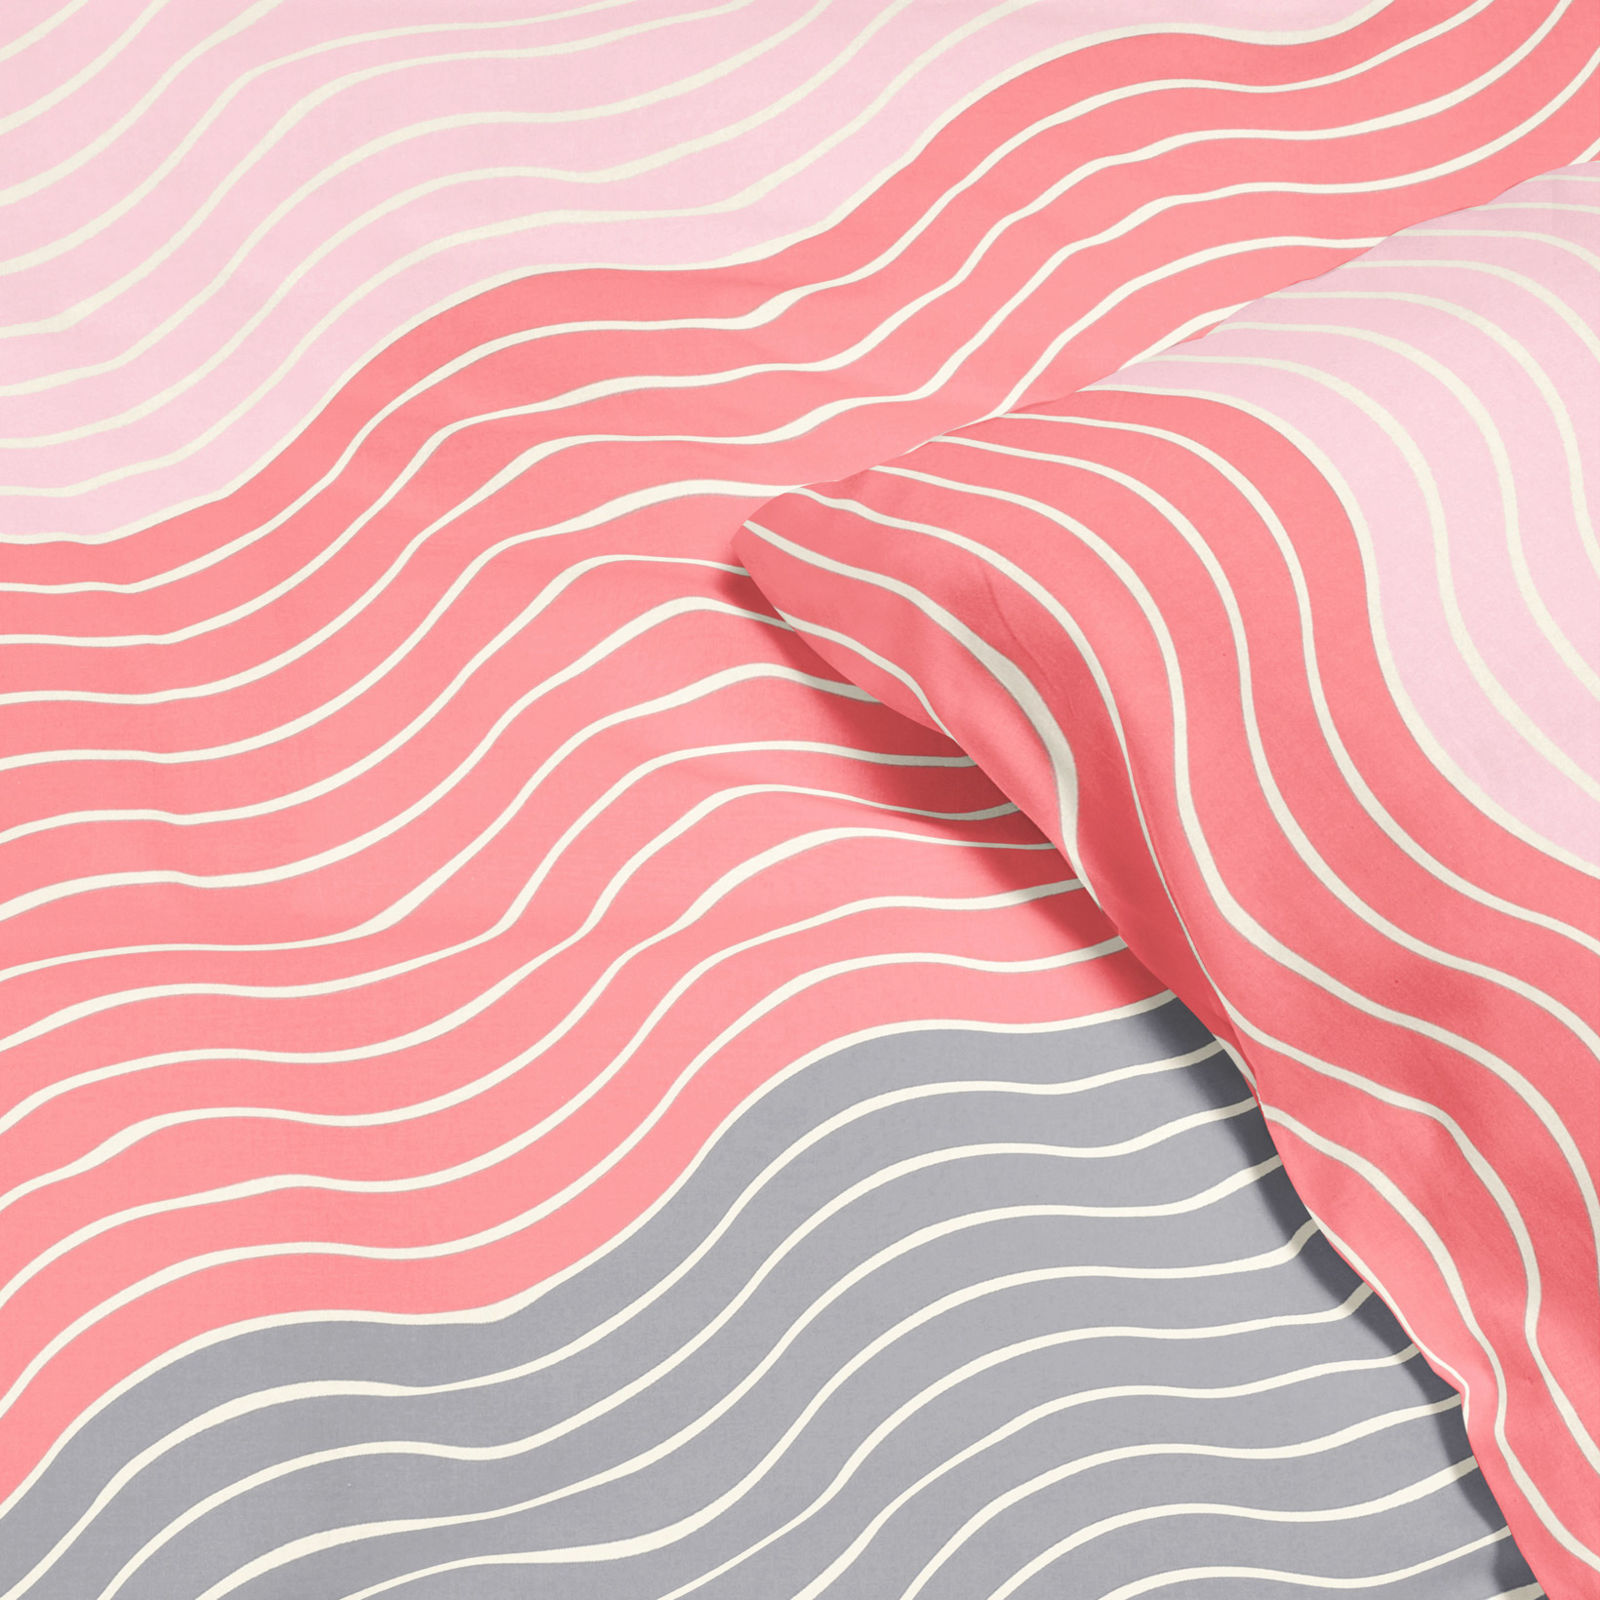 Lenjerie de pat din bumbac satinat Deluxe - valuri roz și gri